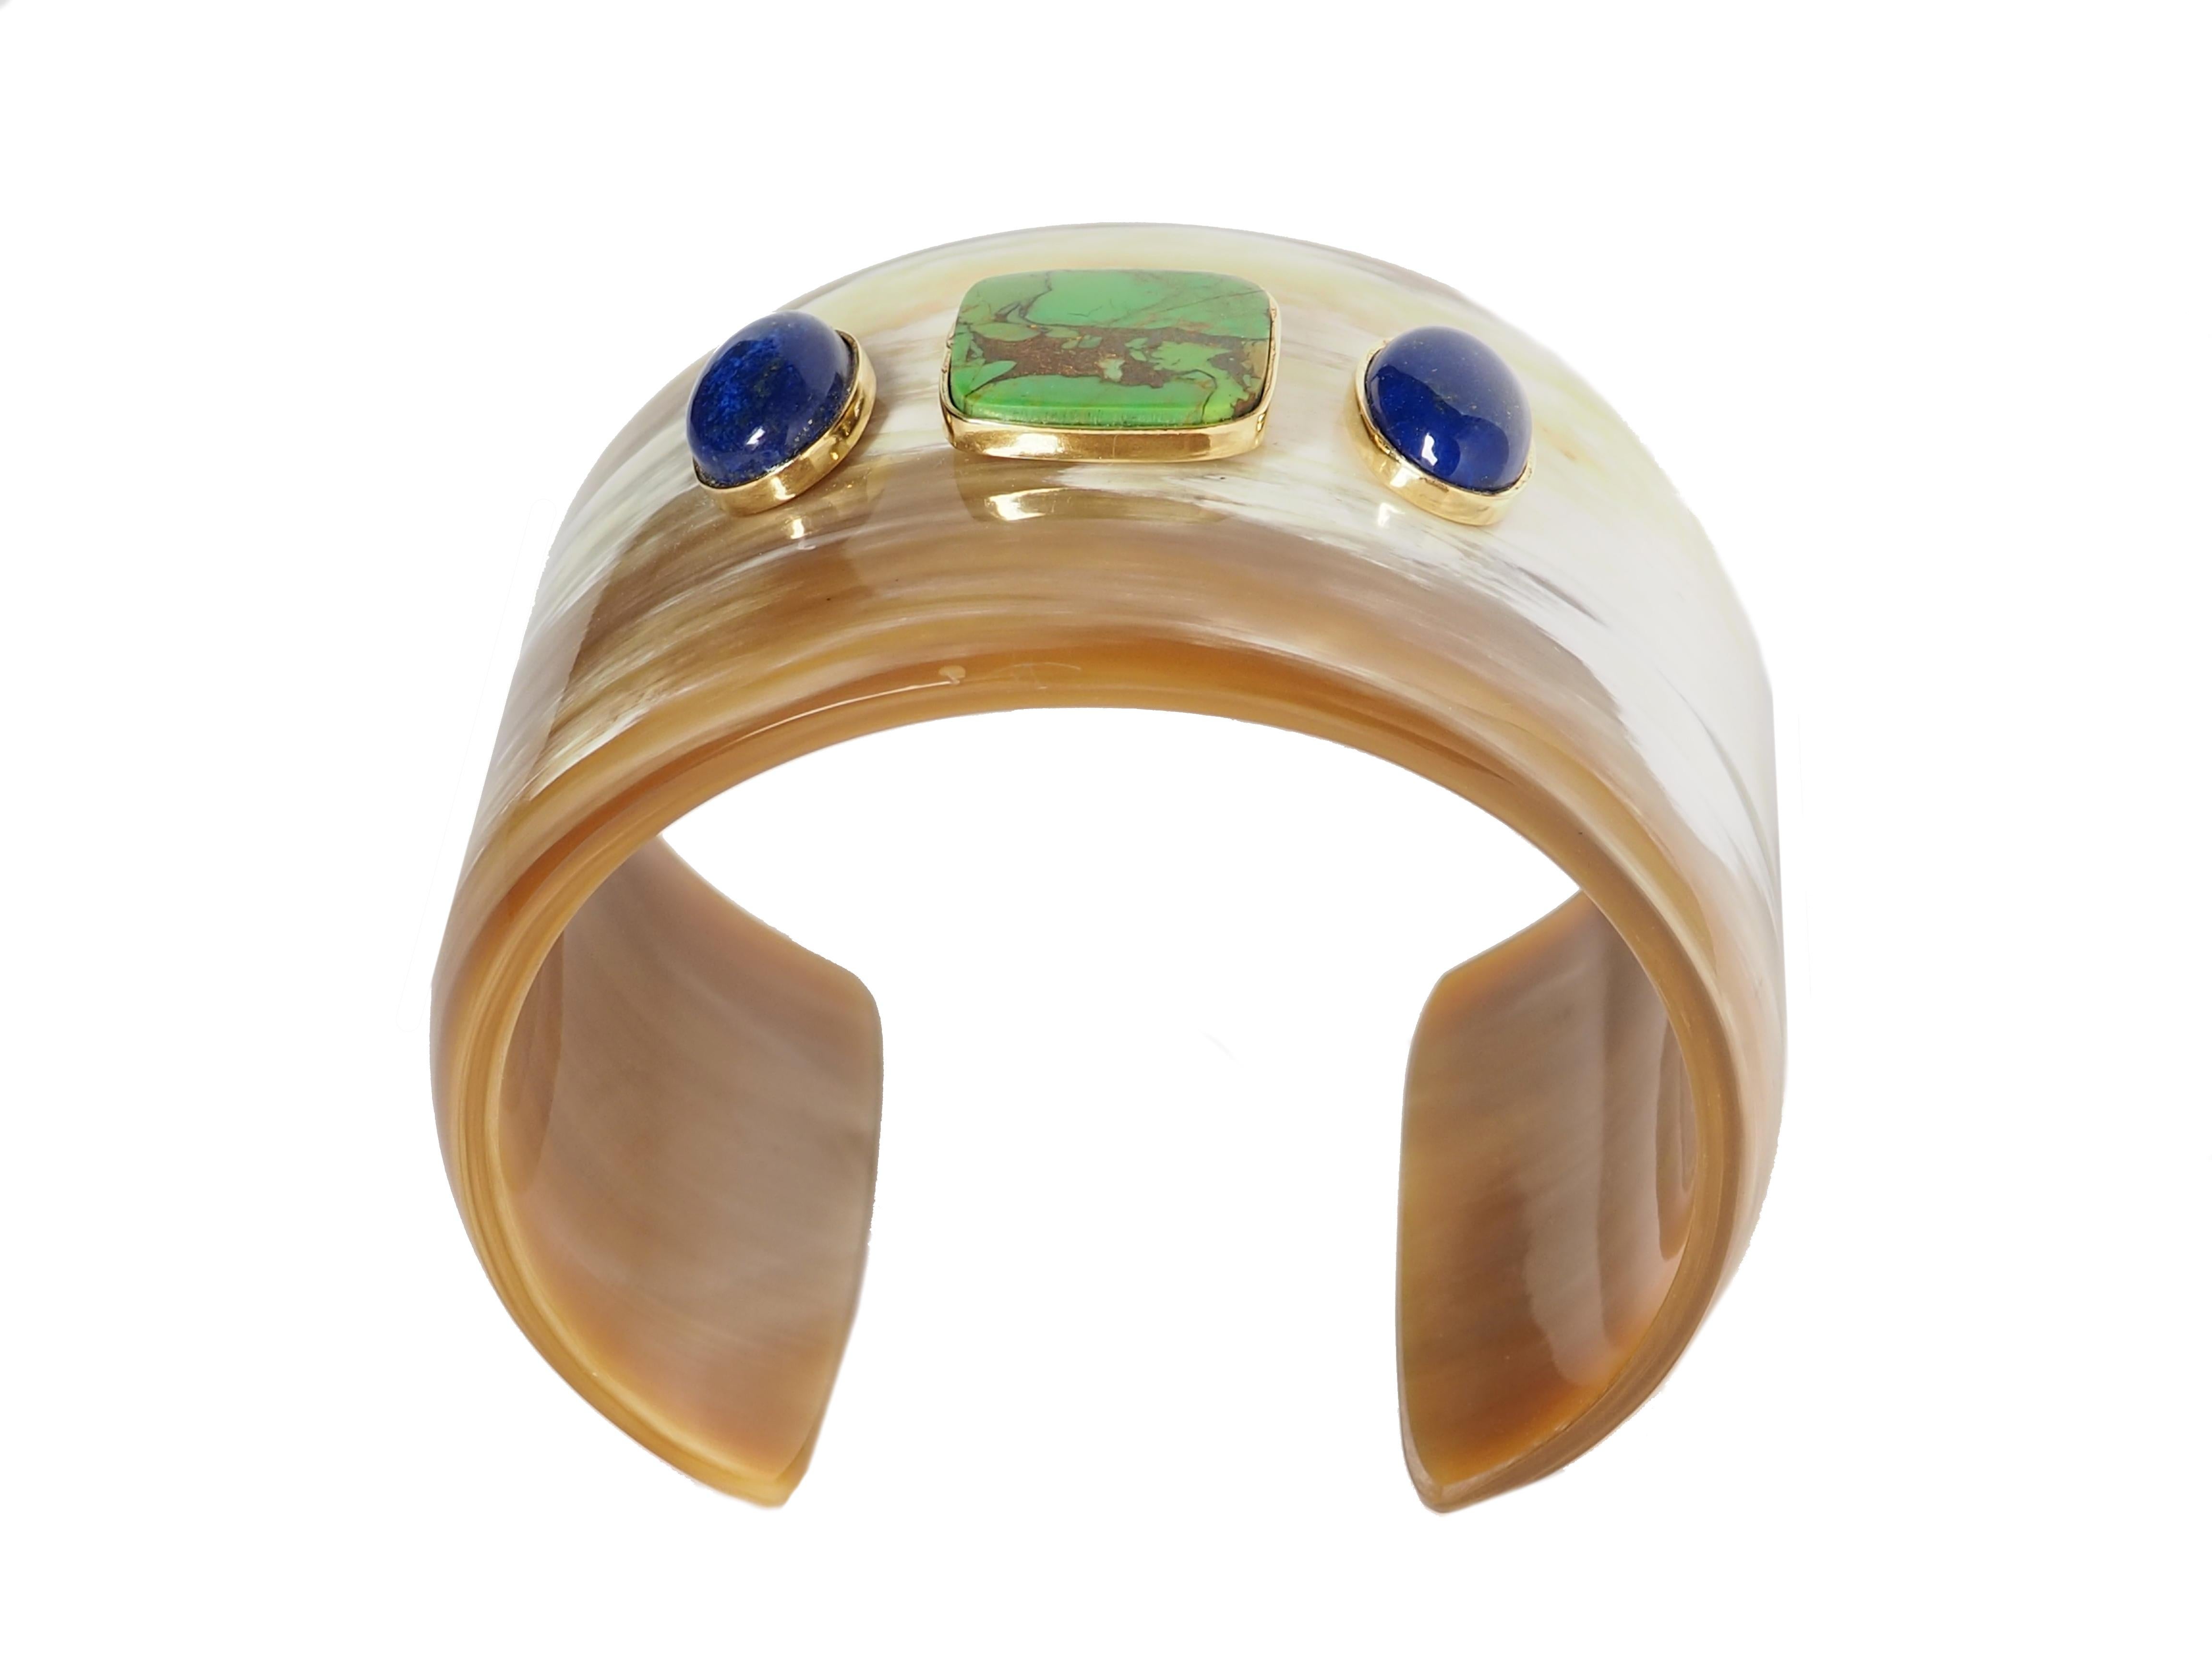 lapis lazuli bangle bracelet